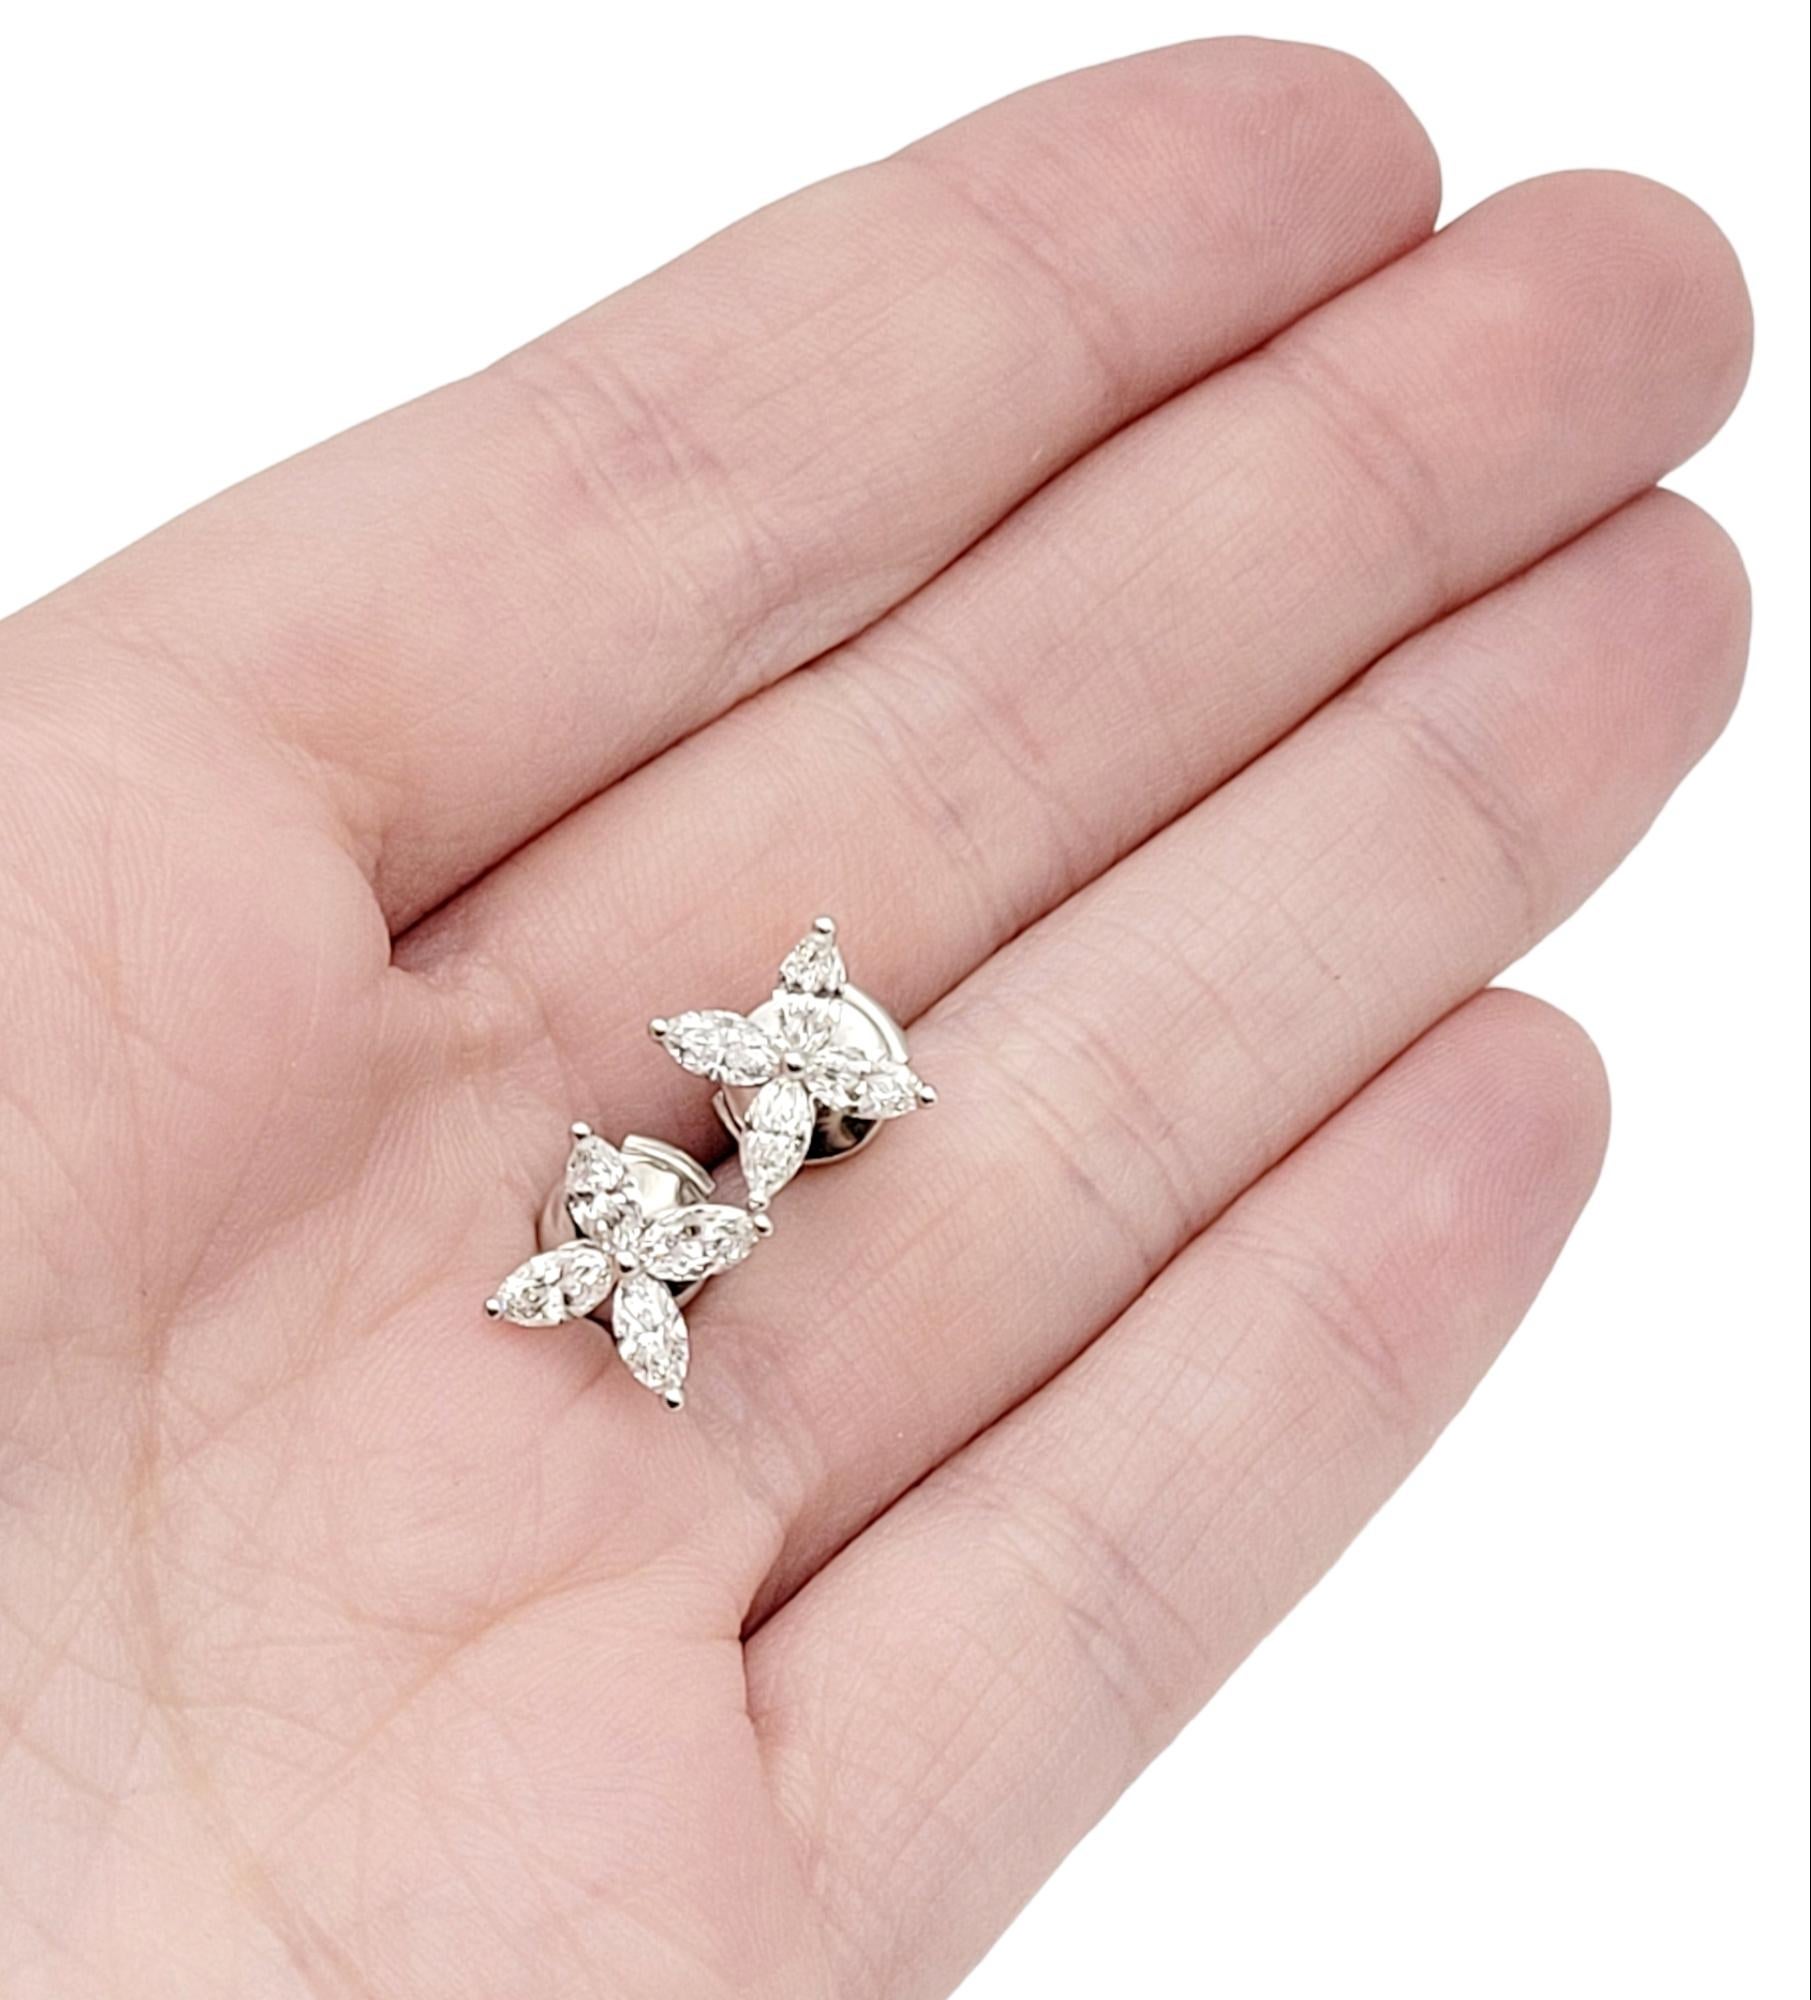 Tiffany & Co. Victoria Medium .92 Carats Diamond Stud Earrings in Platinum For Sale 4